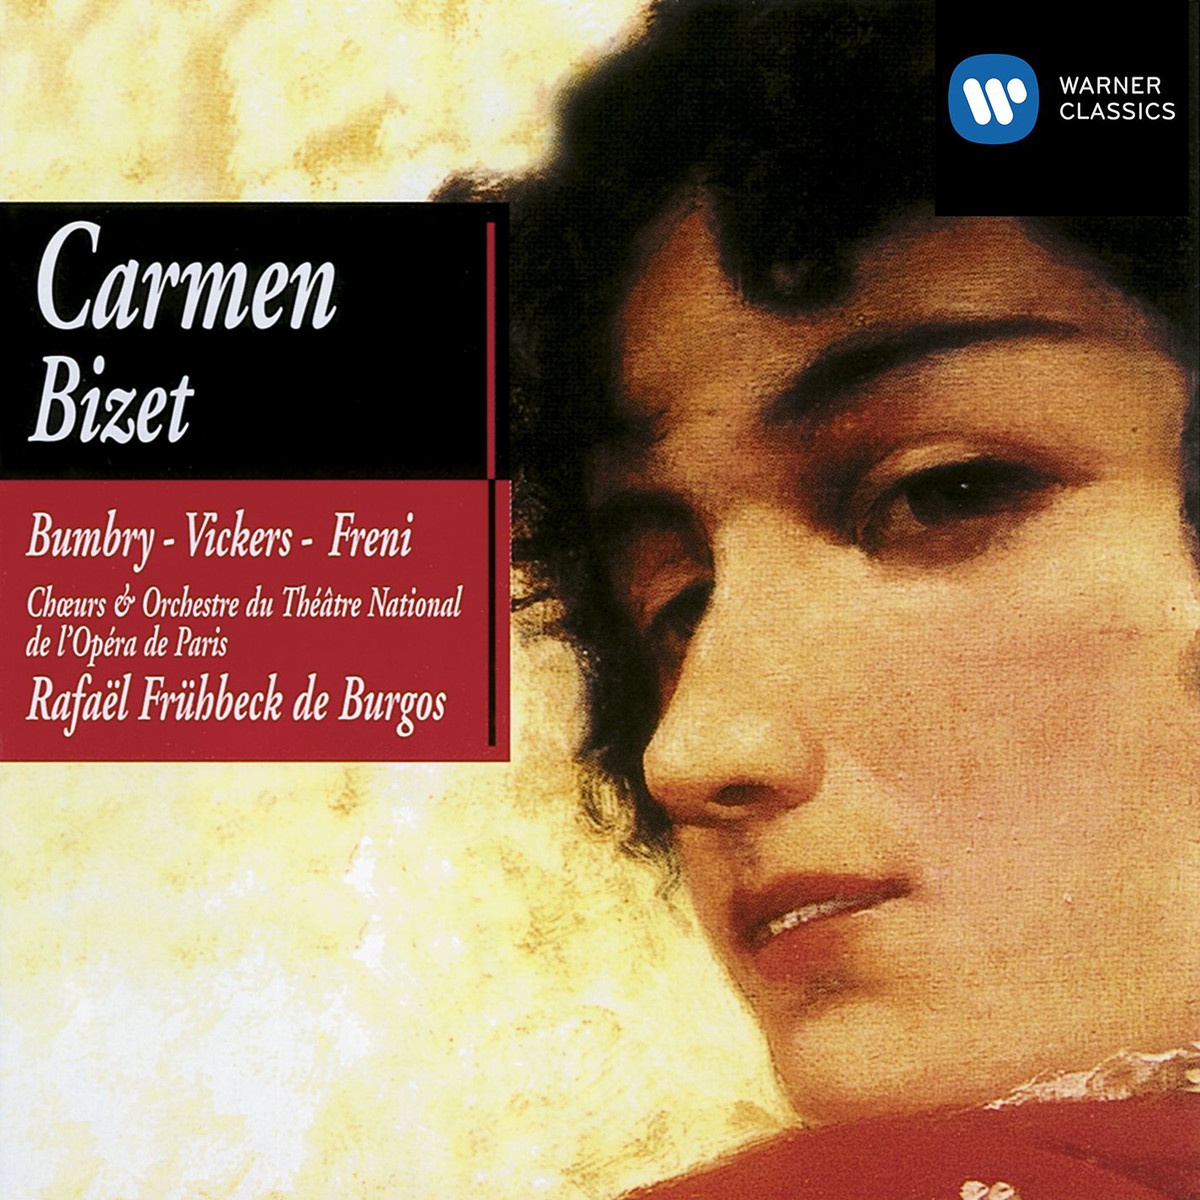 Carmen 1990 Digital Remaster, ACT 4: Ou vastu?